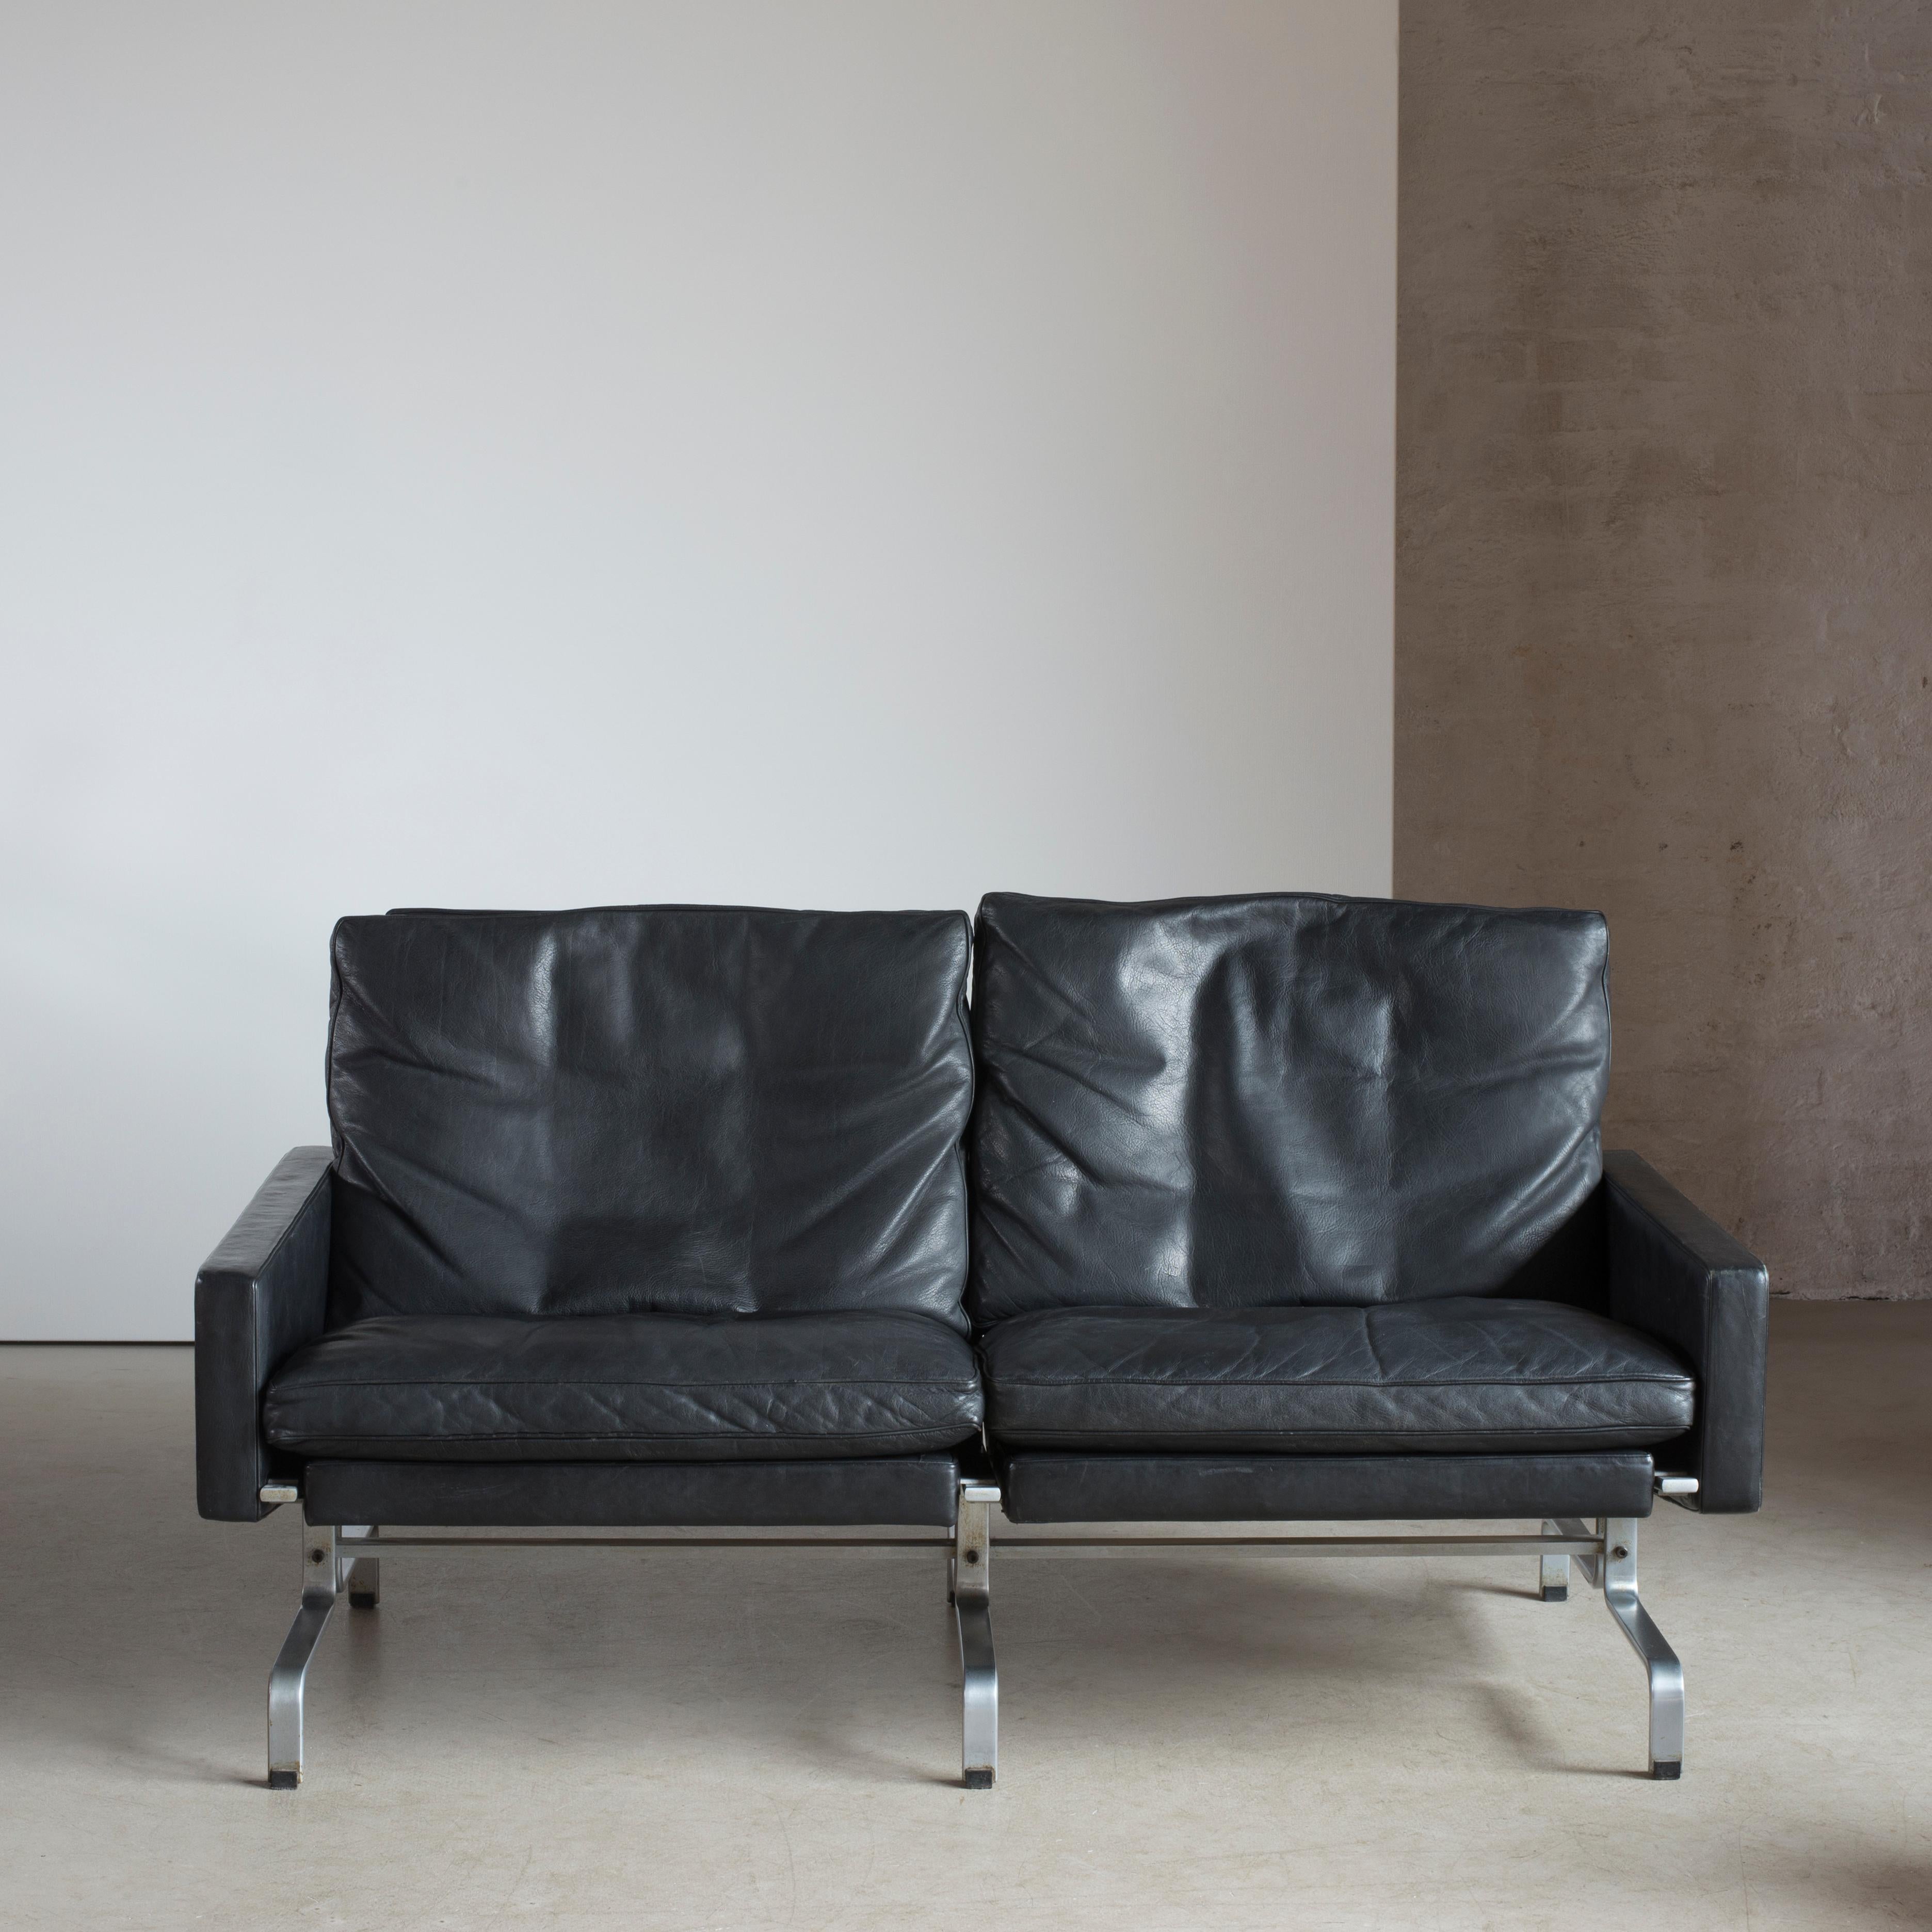 Poul Kjaerholm PK31 sofa. Dull chromium-plated steel, black colored oxhide, loose down cushions. Executed by E. Kold Christensen, Denmark.